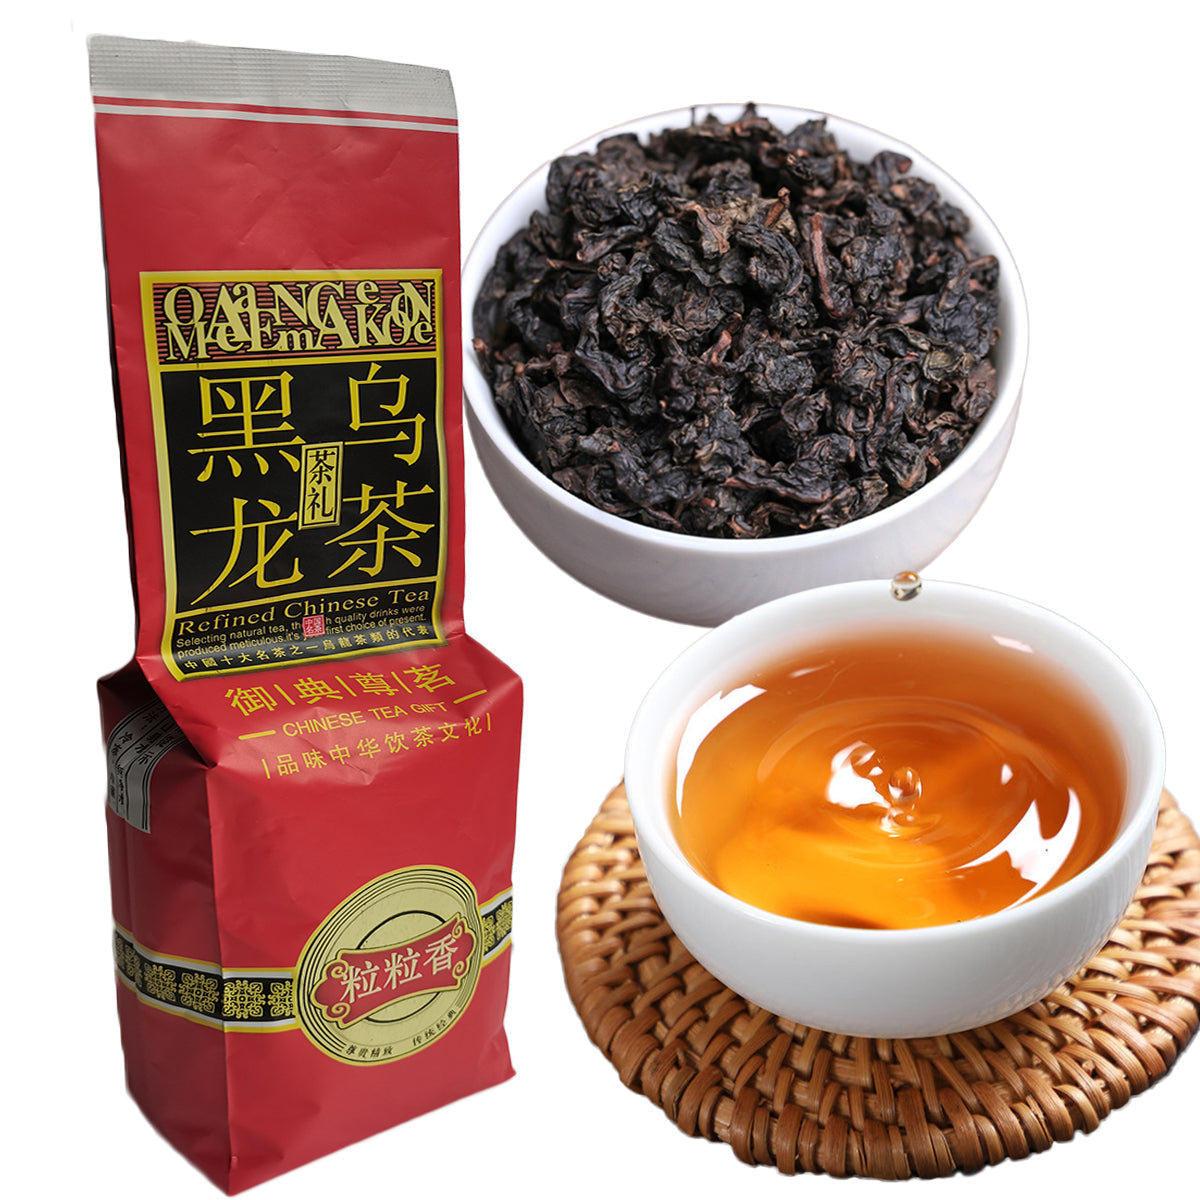 HelloYoung 250g (0.55lb) HelloYoung Slimming Tea Beauty Black Tea Organic Black Oolong Tea Tieguanyin Tea